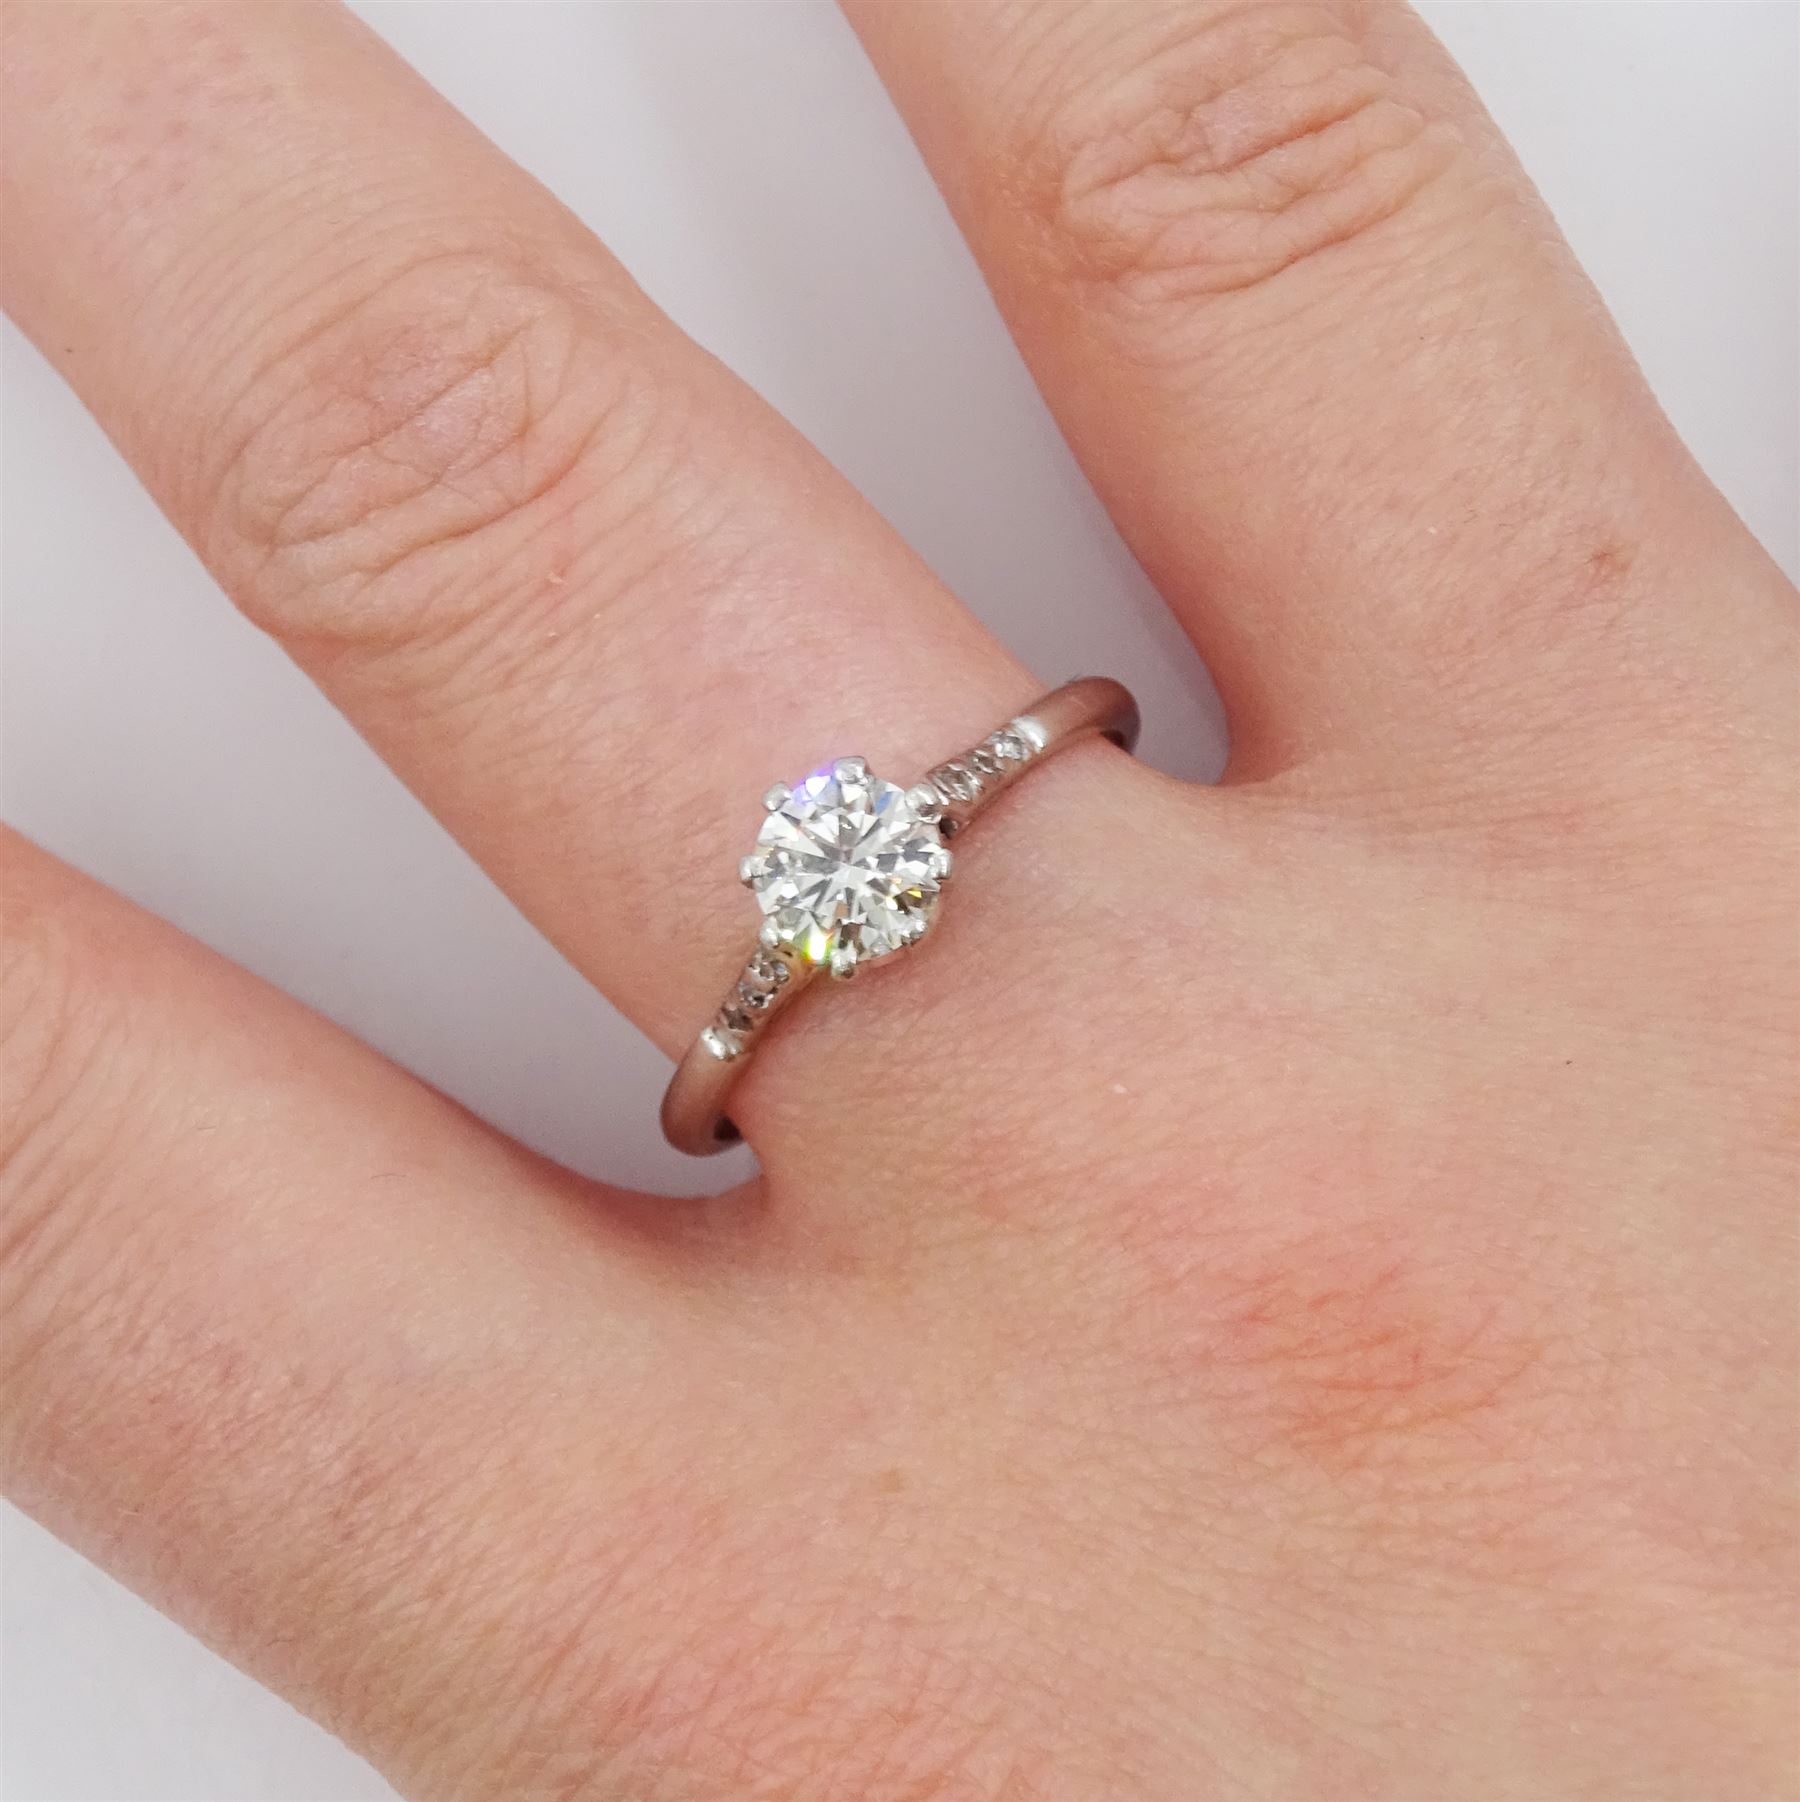 Platinum single stone round brilliant cut diamond ring - Image 2 of 4